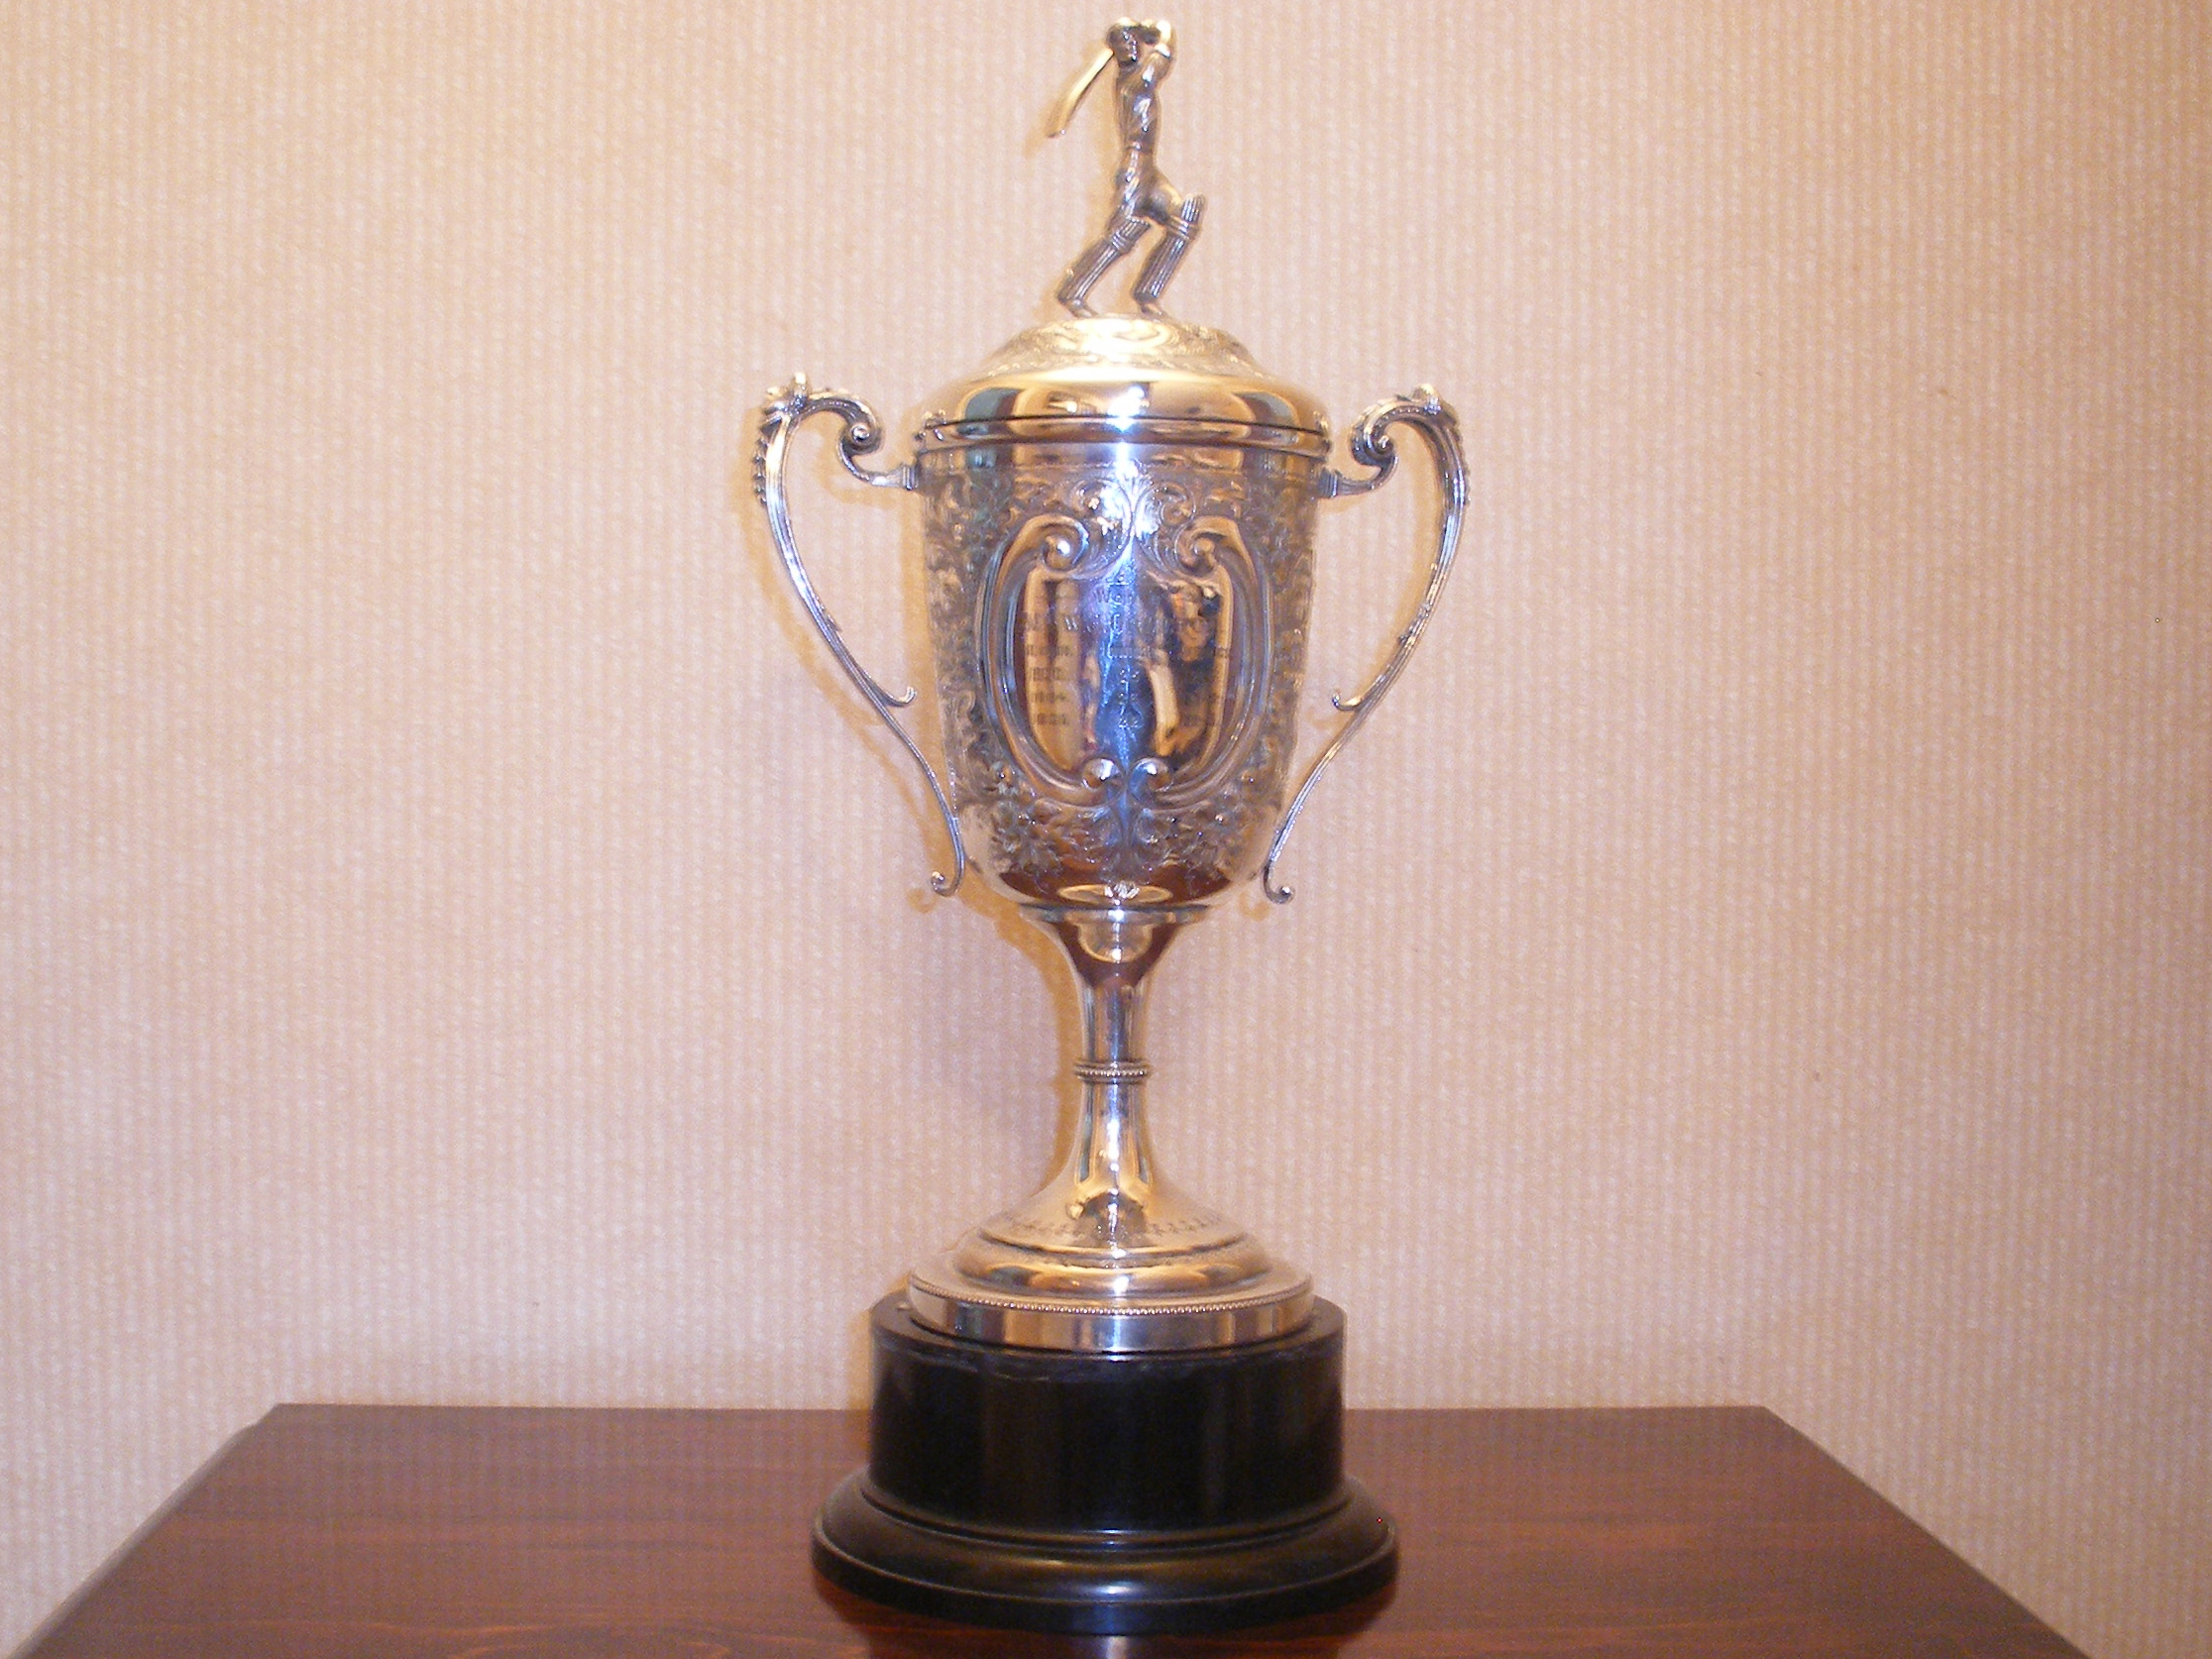 The George Haworth Trophy